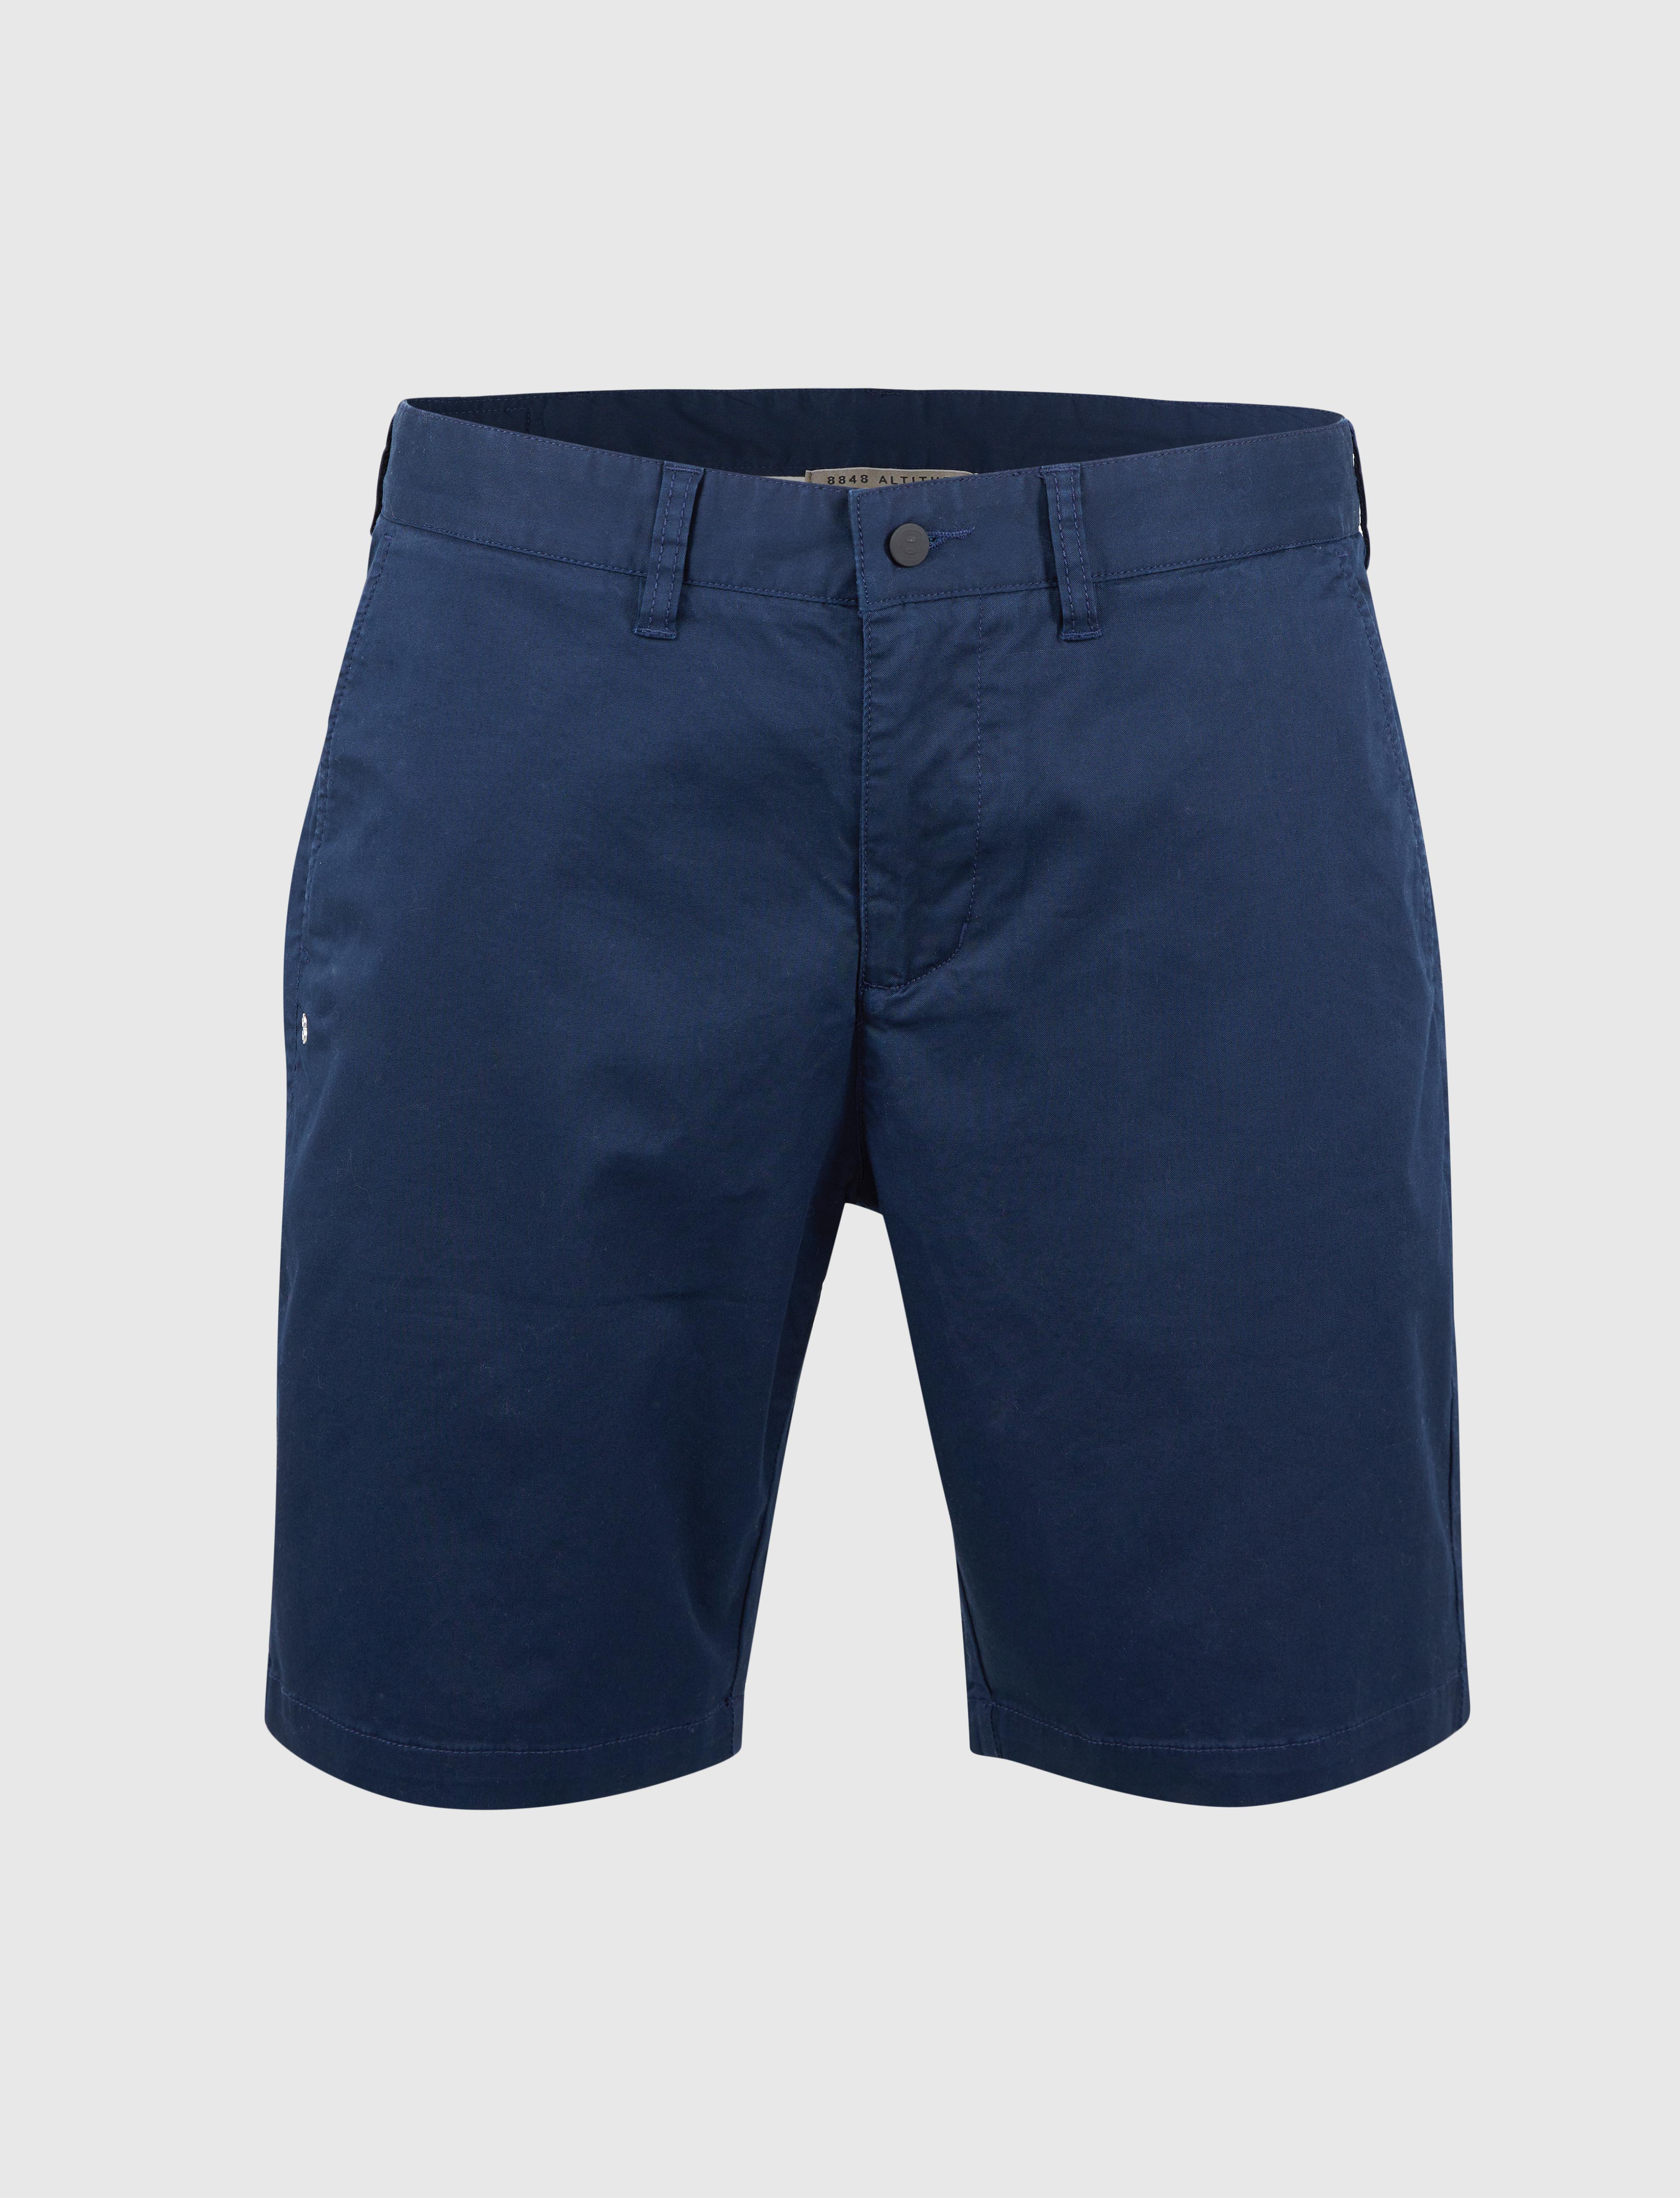 Lugano 2.0 Shorts Navy - Marinblå shorts herr